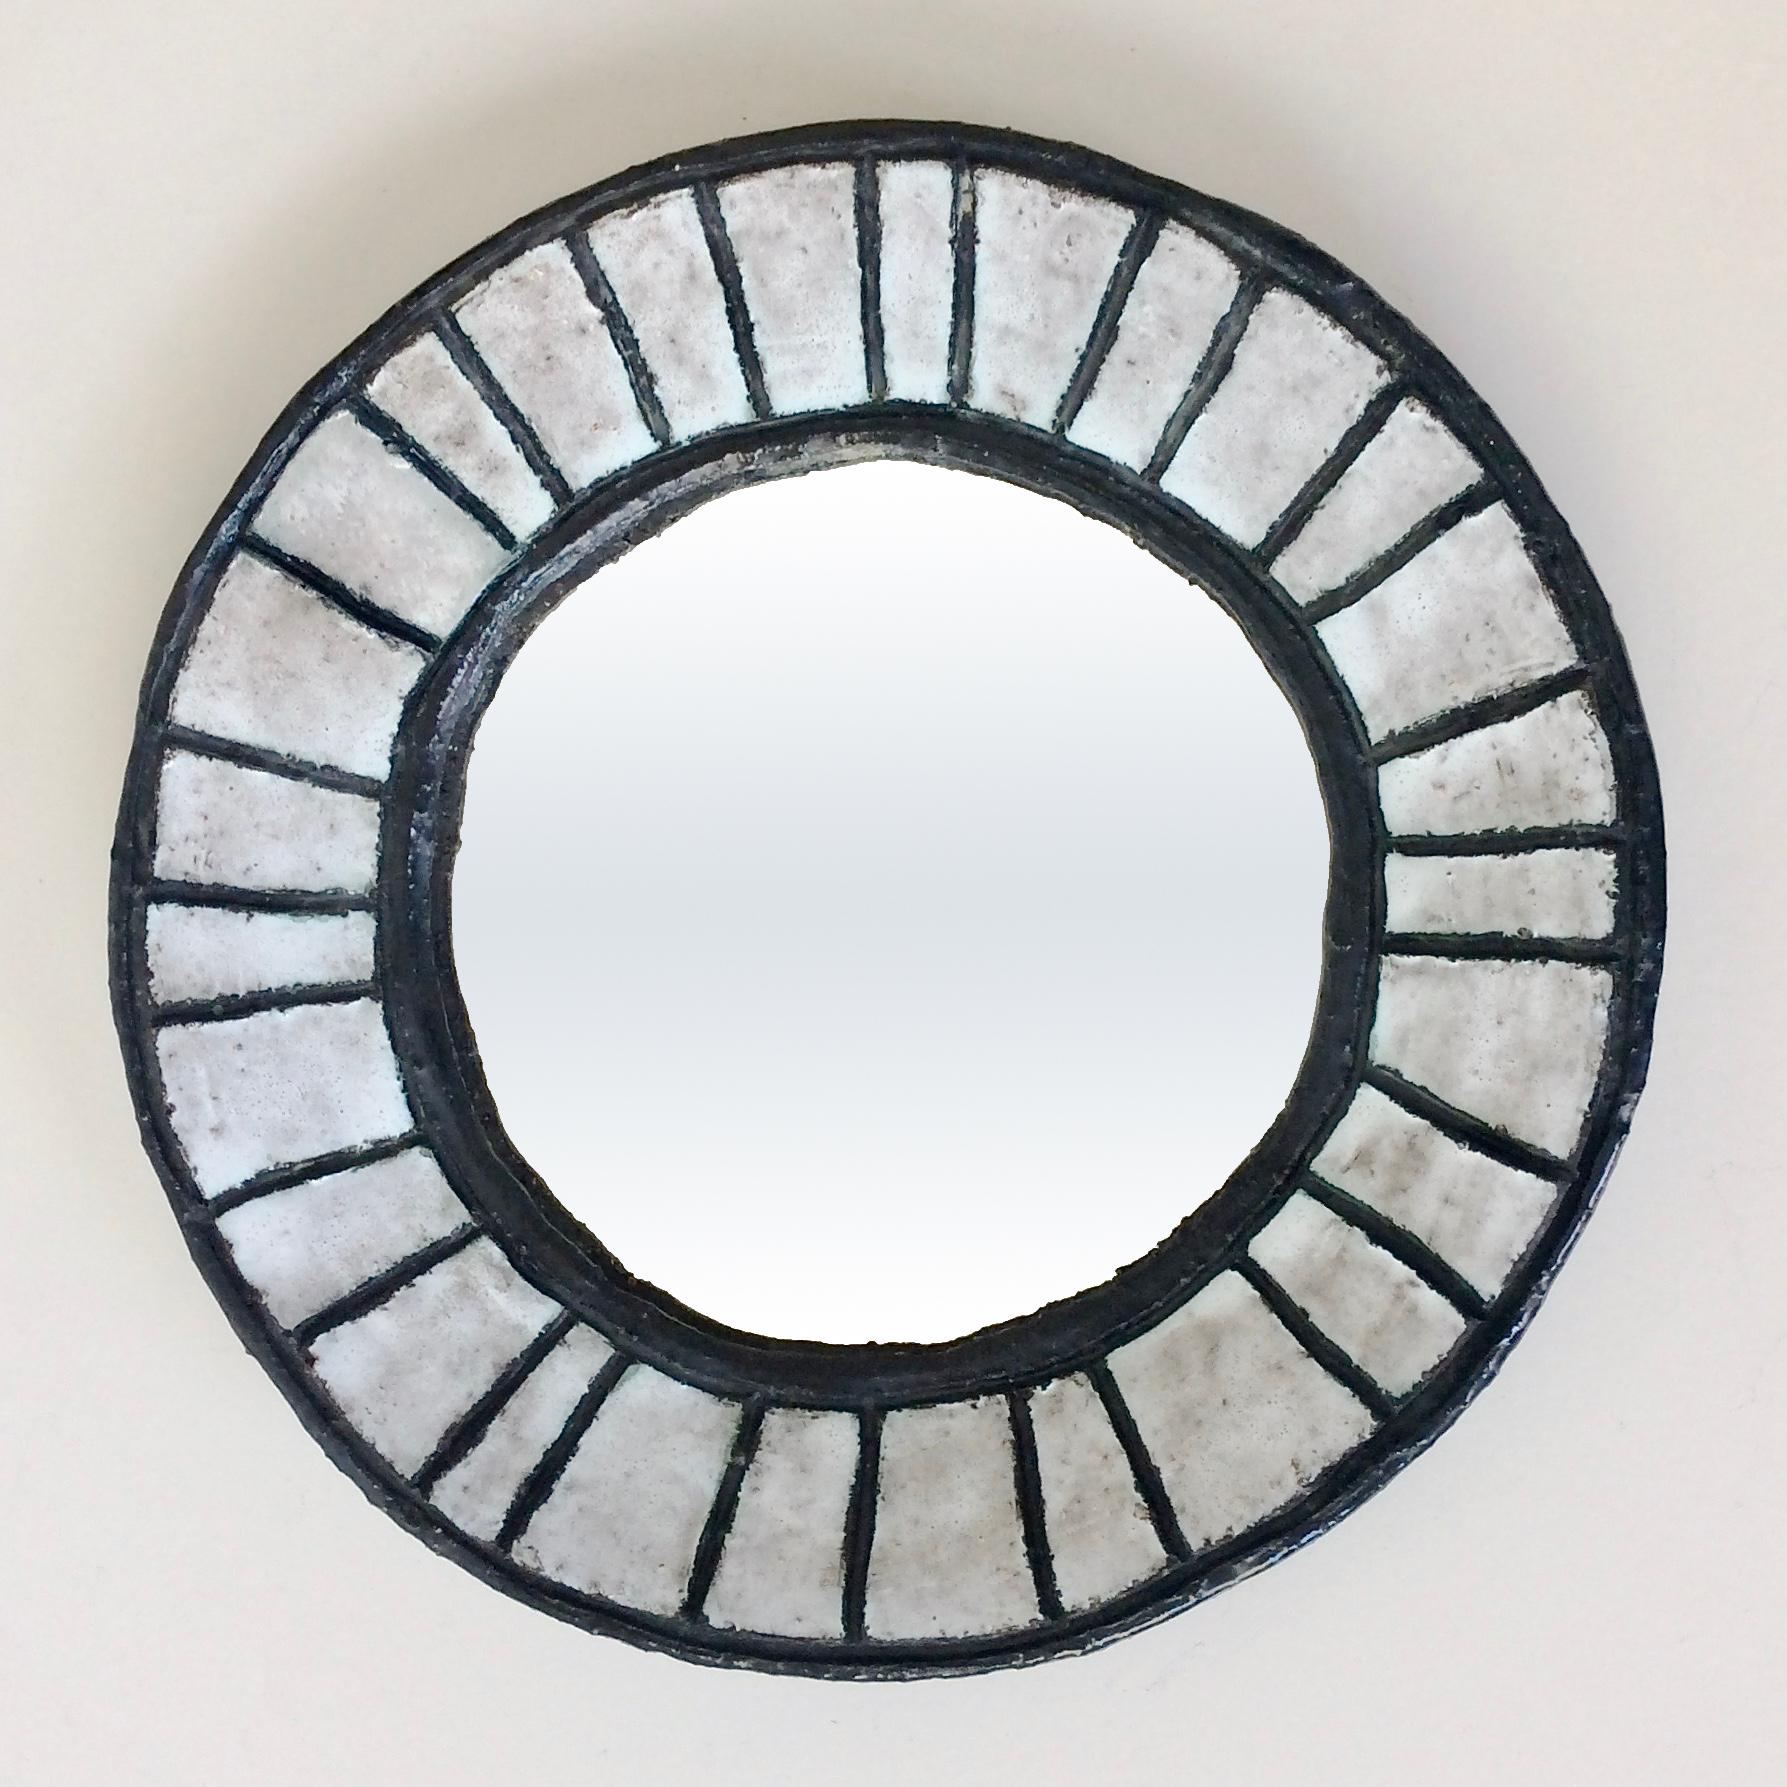 Rare Odette Dijeux circular round mirror, circa 1950, Belgium.
Enameled black and light grey ceramic. 
Signed on the back: Odette Dijeux.
Dimensions: 31 cm diameter, 4 cm D.
Original condition.
Same spirit of works by Georges Jouve, Denise Gatard,